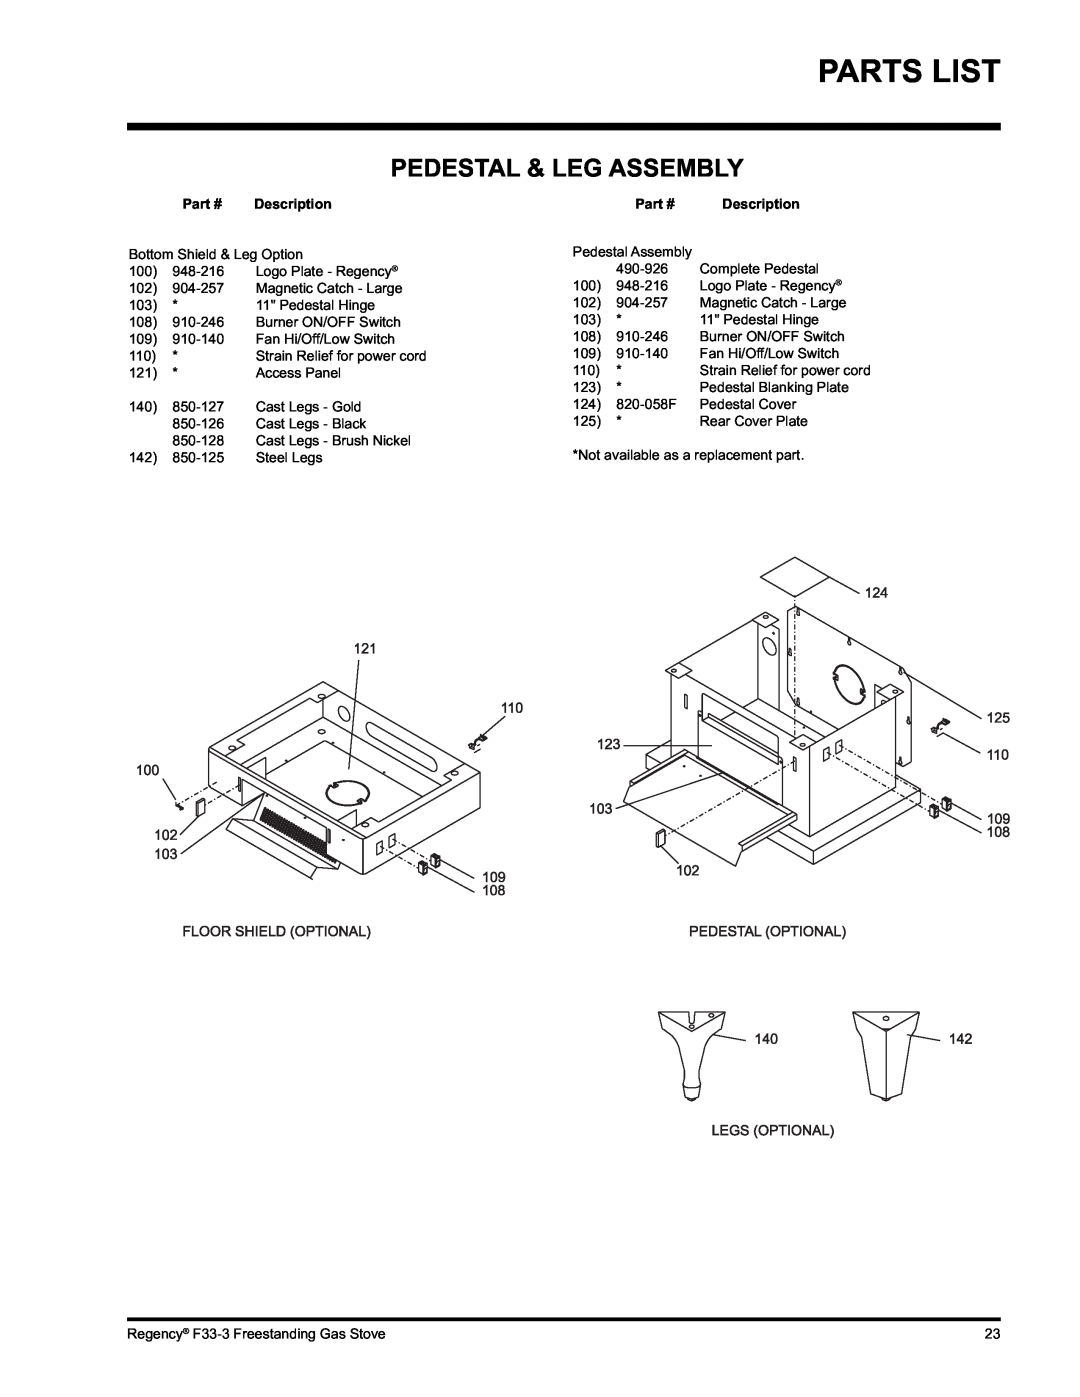 Regency Wraps F33 installation manual Pedestal & Leg Assembly, Parts List, Description 